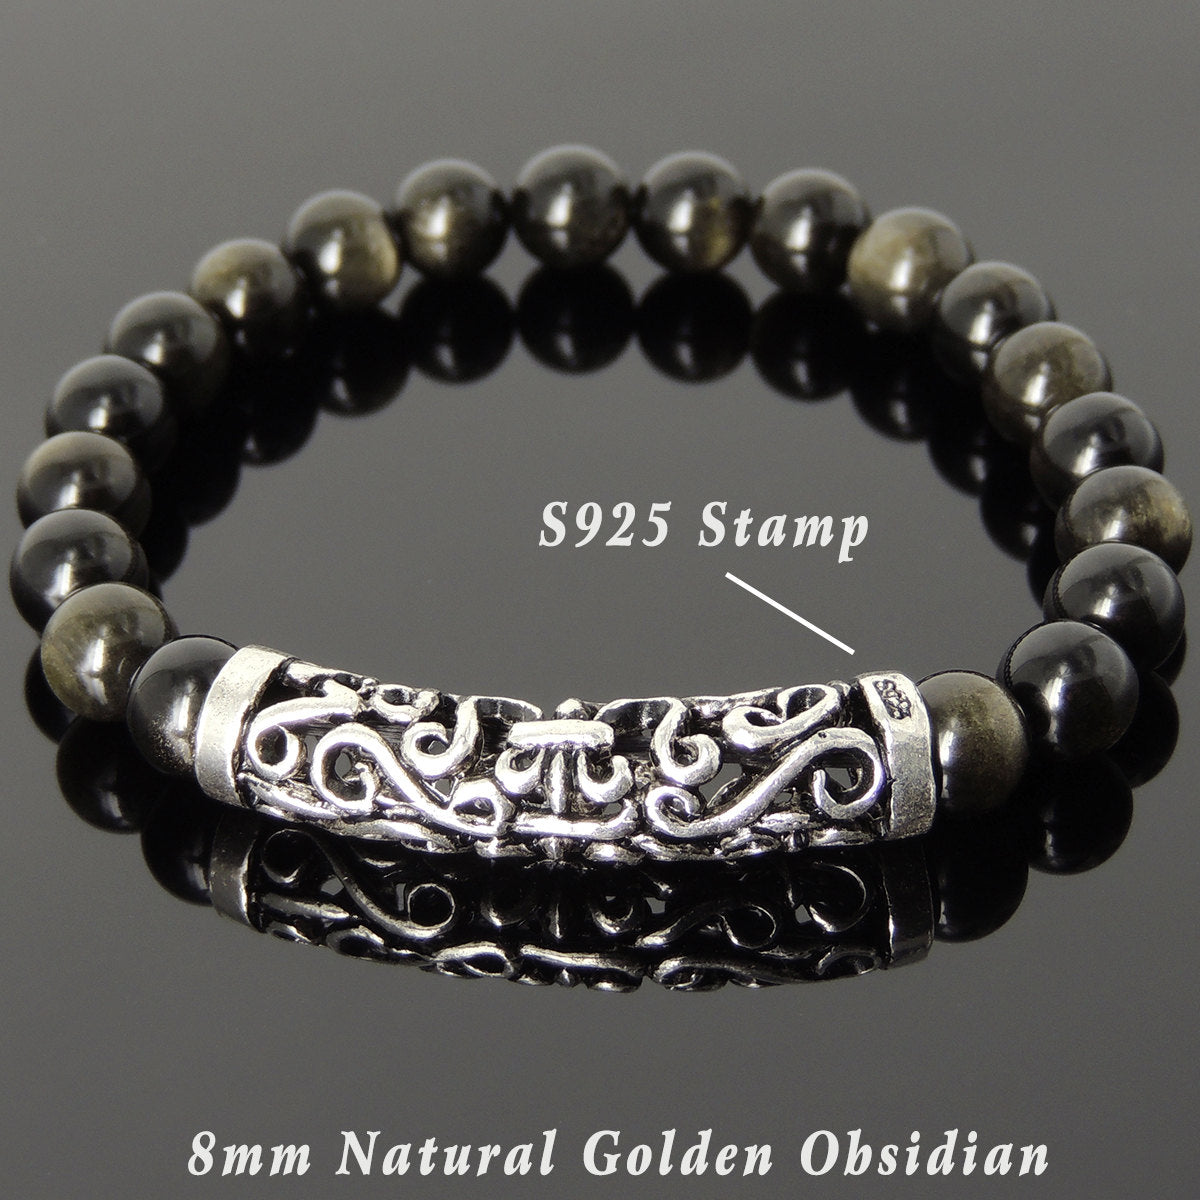 8mm Golden Obsidian Healing Gemstone Bracelet with S925 Sterling Silver Celtic Fleur de Lis Charm - Handmade by Gem & Silver BR976